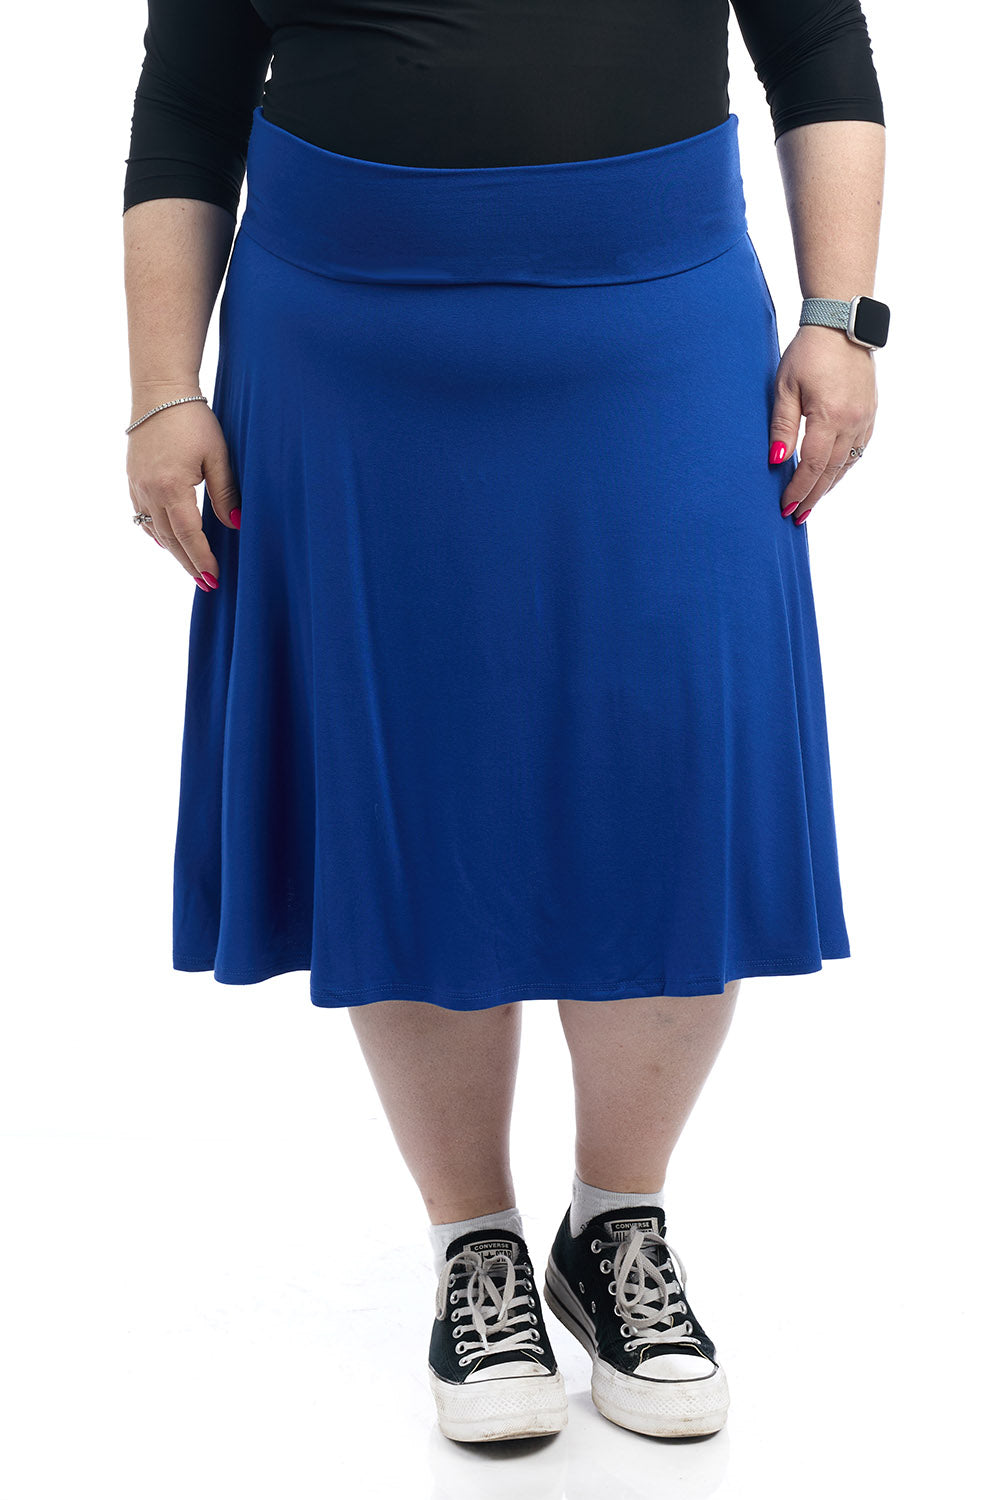 Plus Size Old Navy inspired below knee length foldover flary midi royal blue skirt